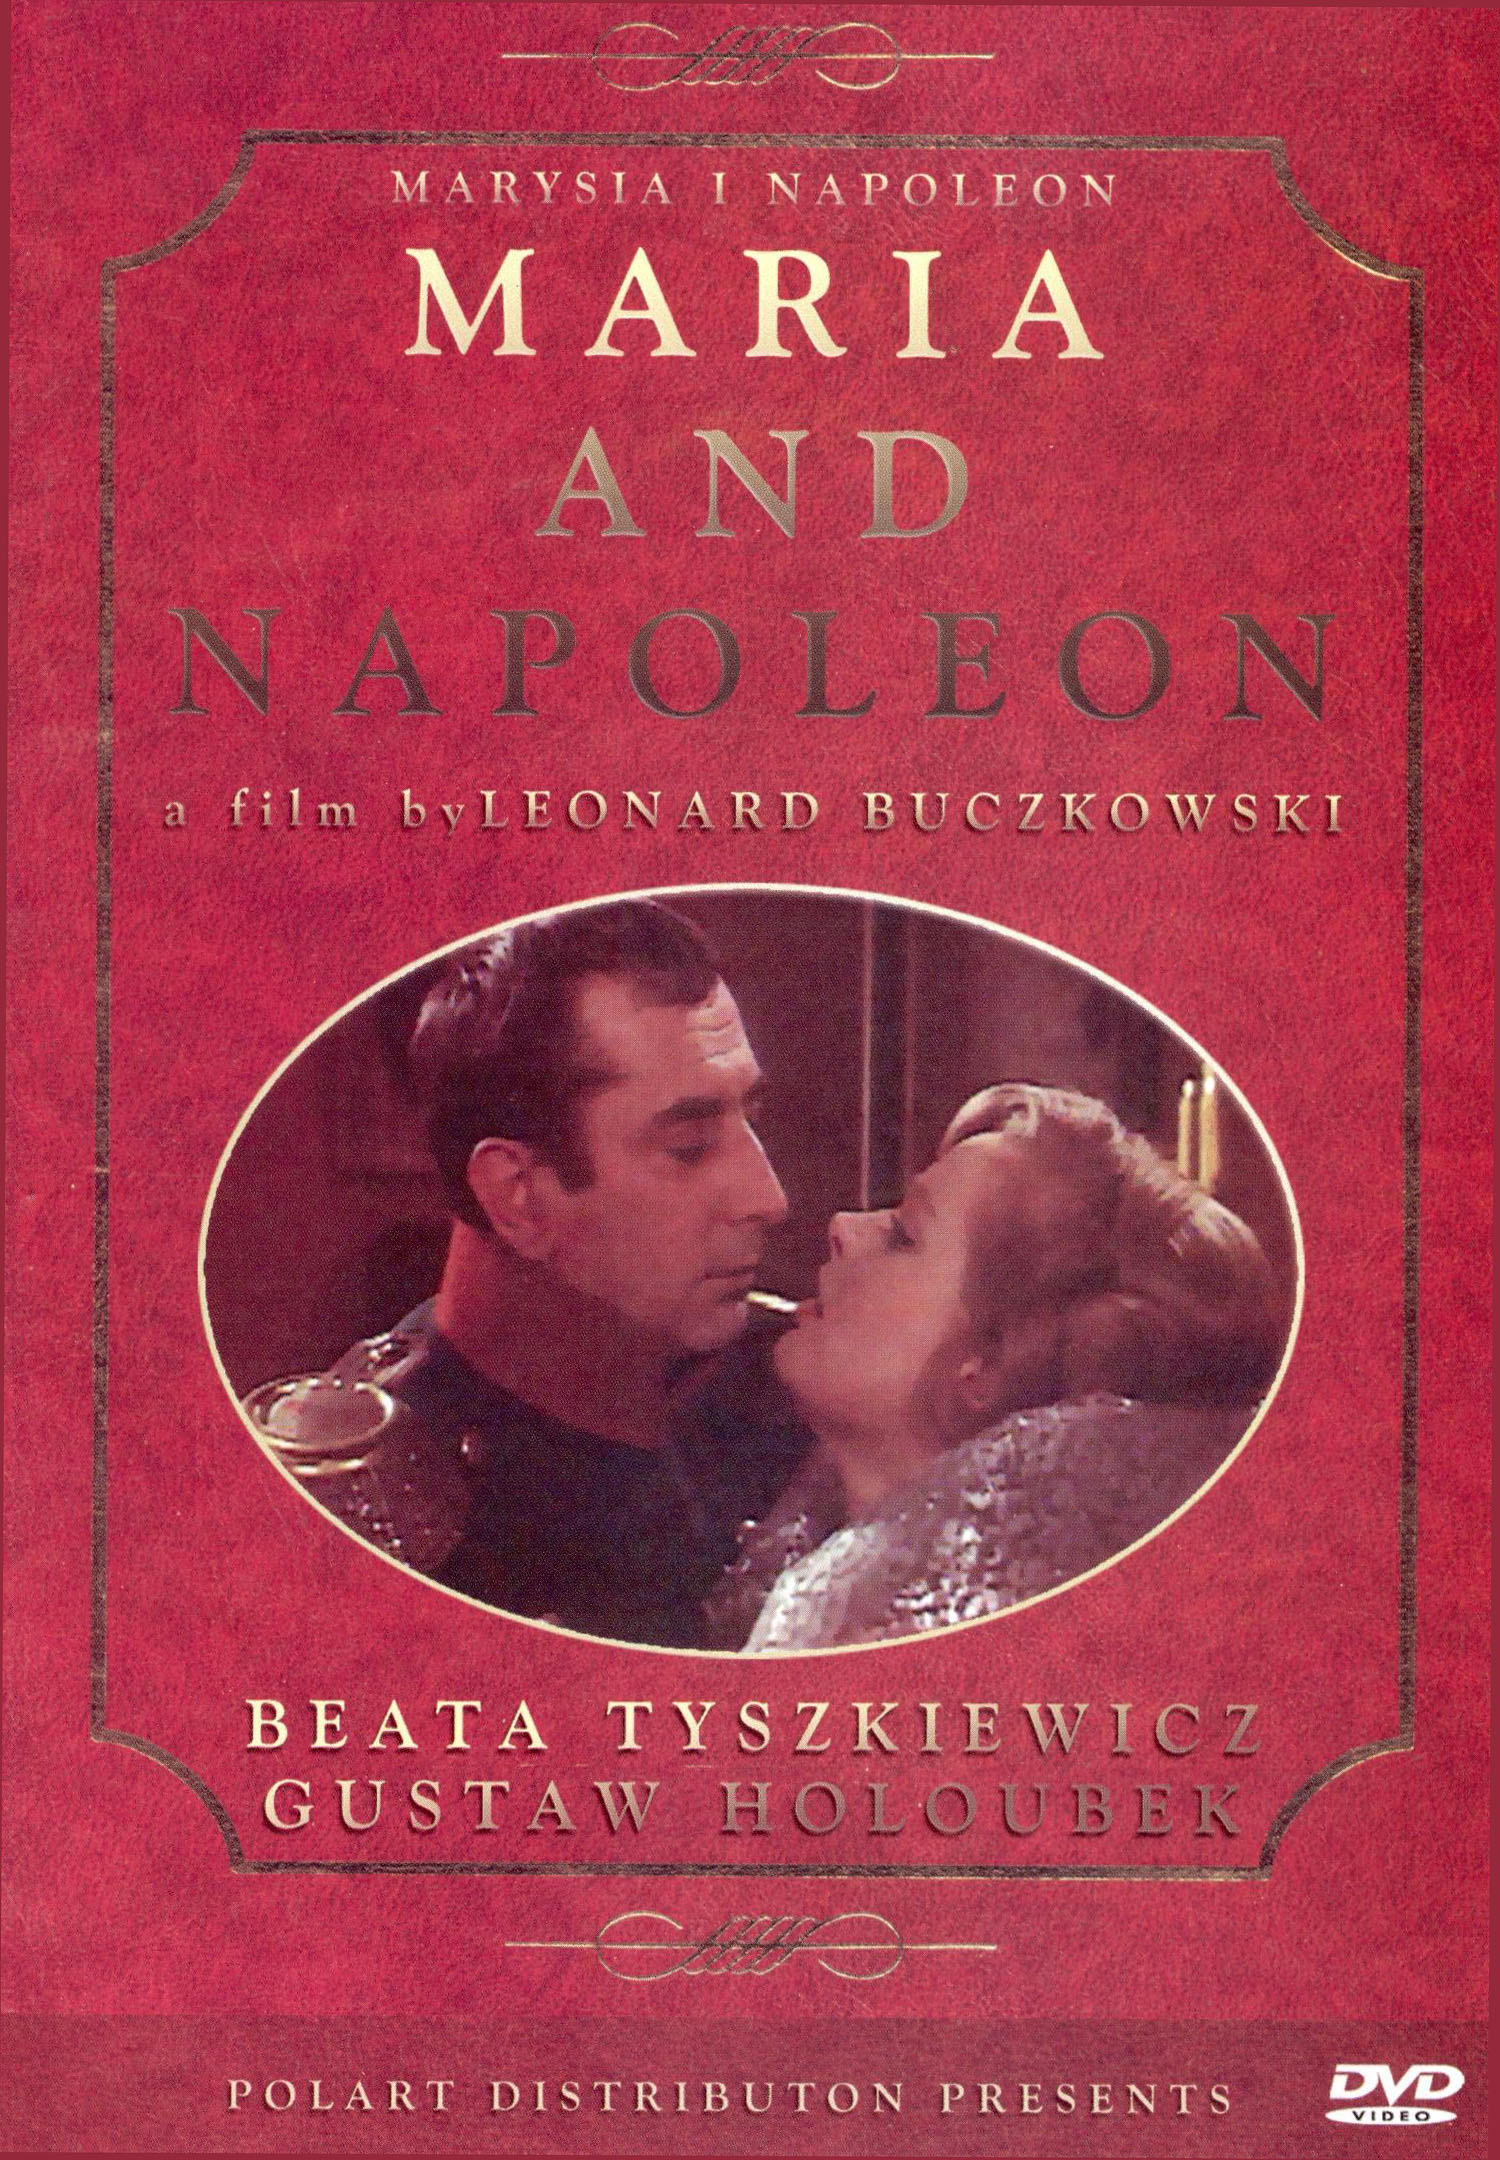 Napoleon DVD Release Date